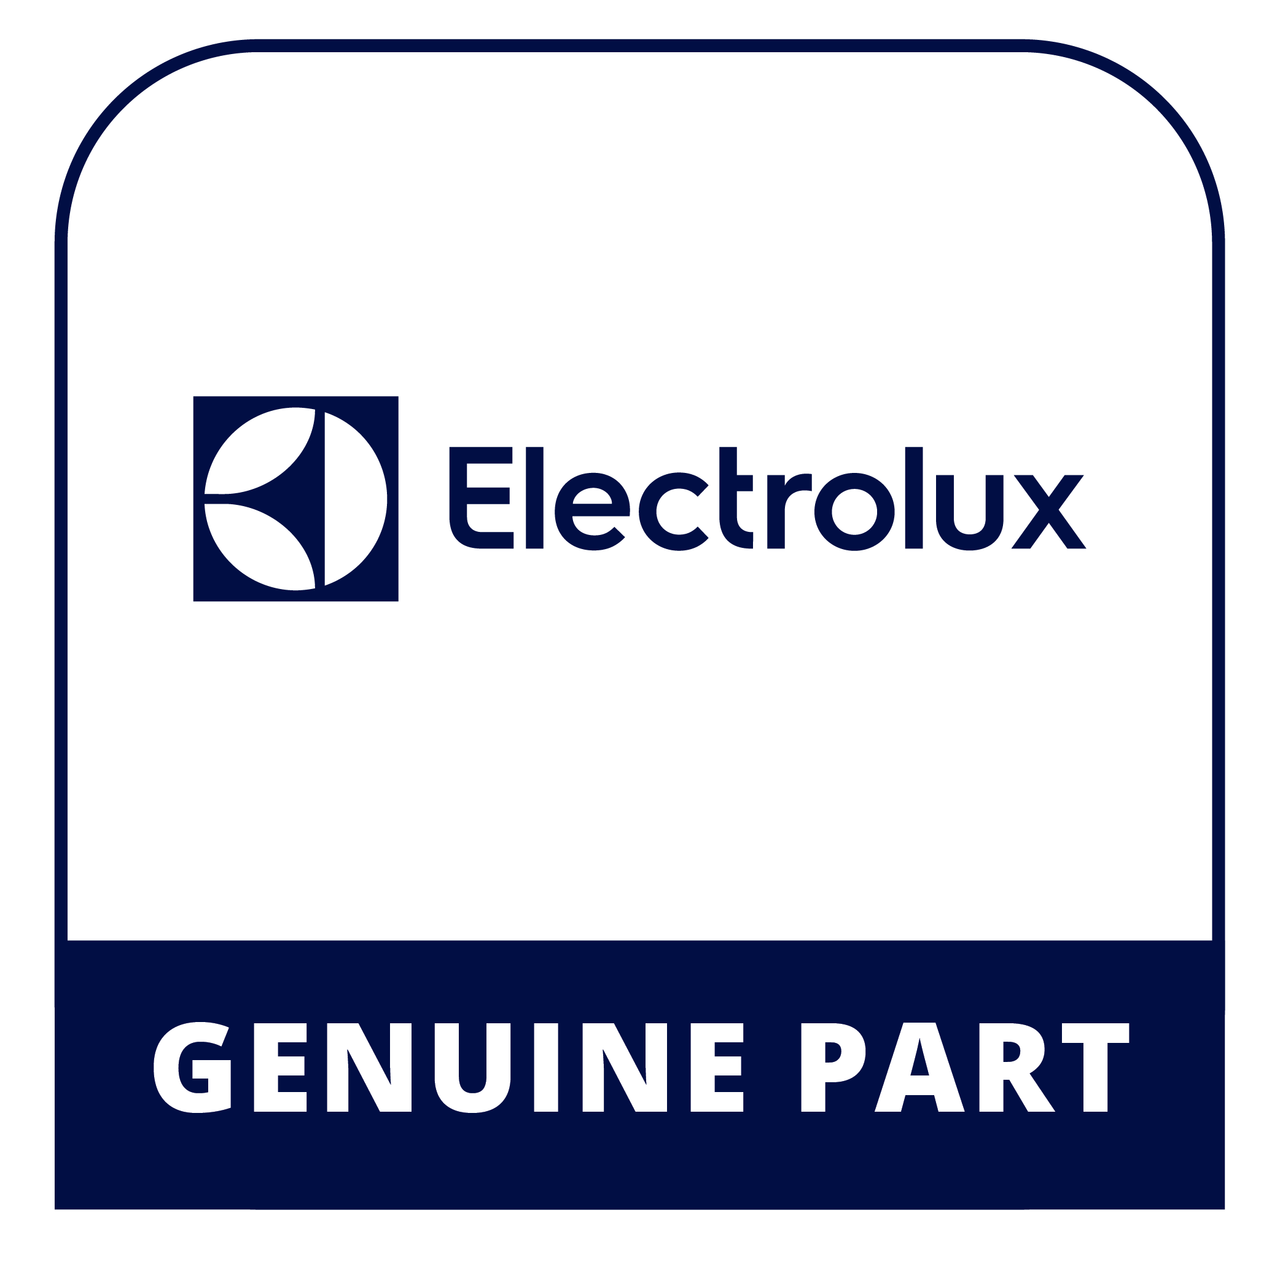 Frigidaire - Electrolux 5304508615 Energy Guide Label - Genuine Electrolux Part